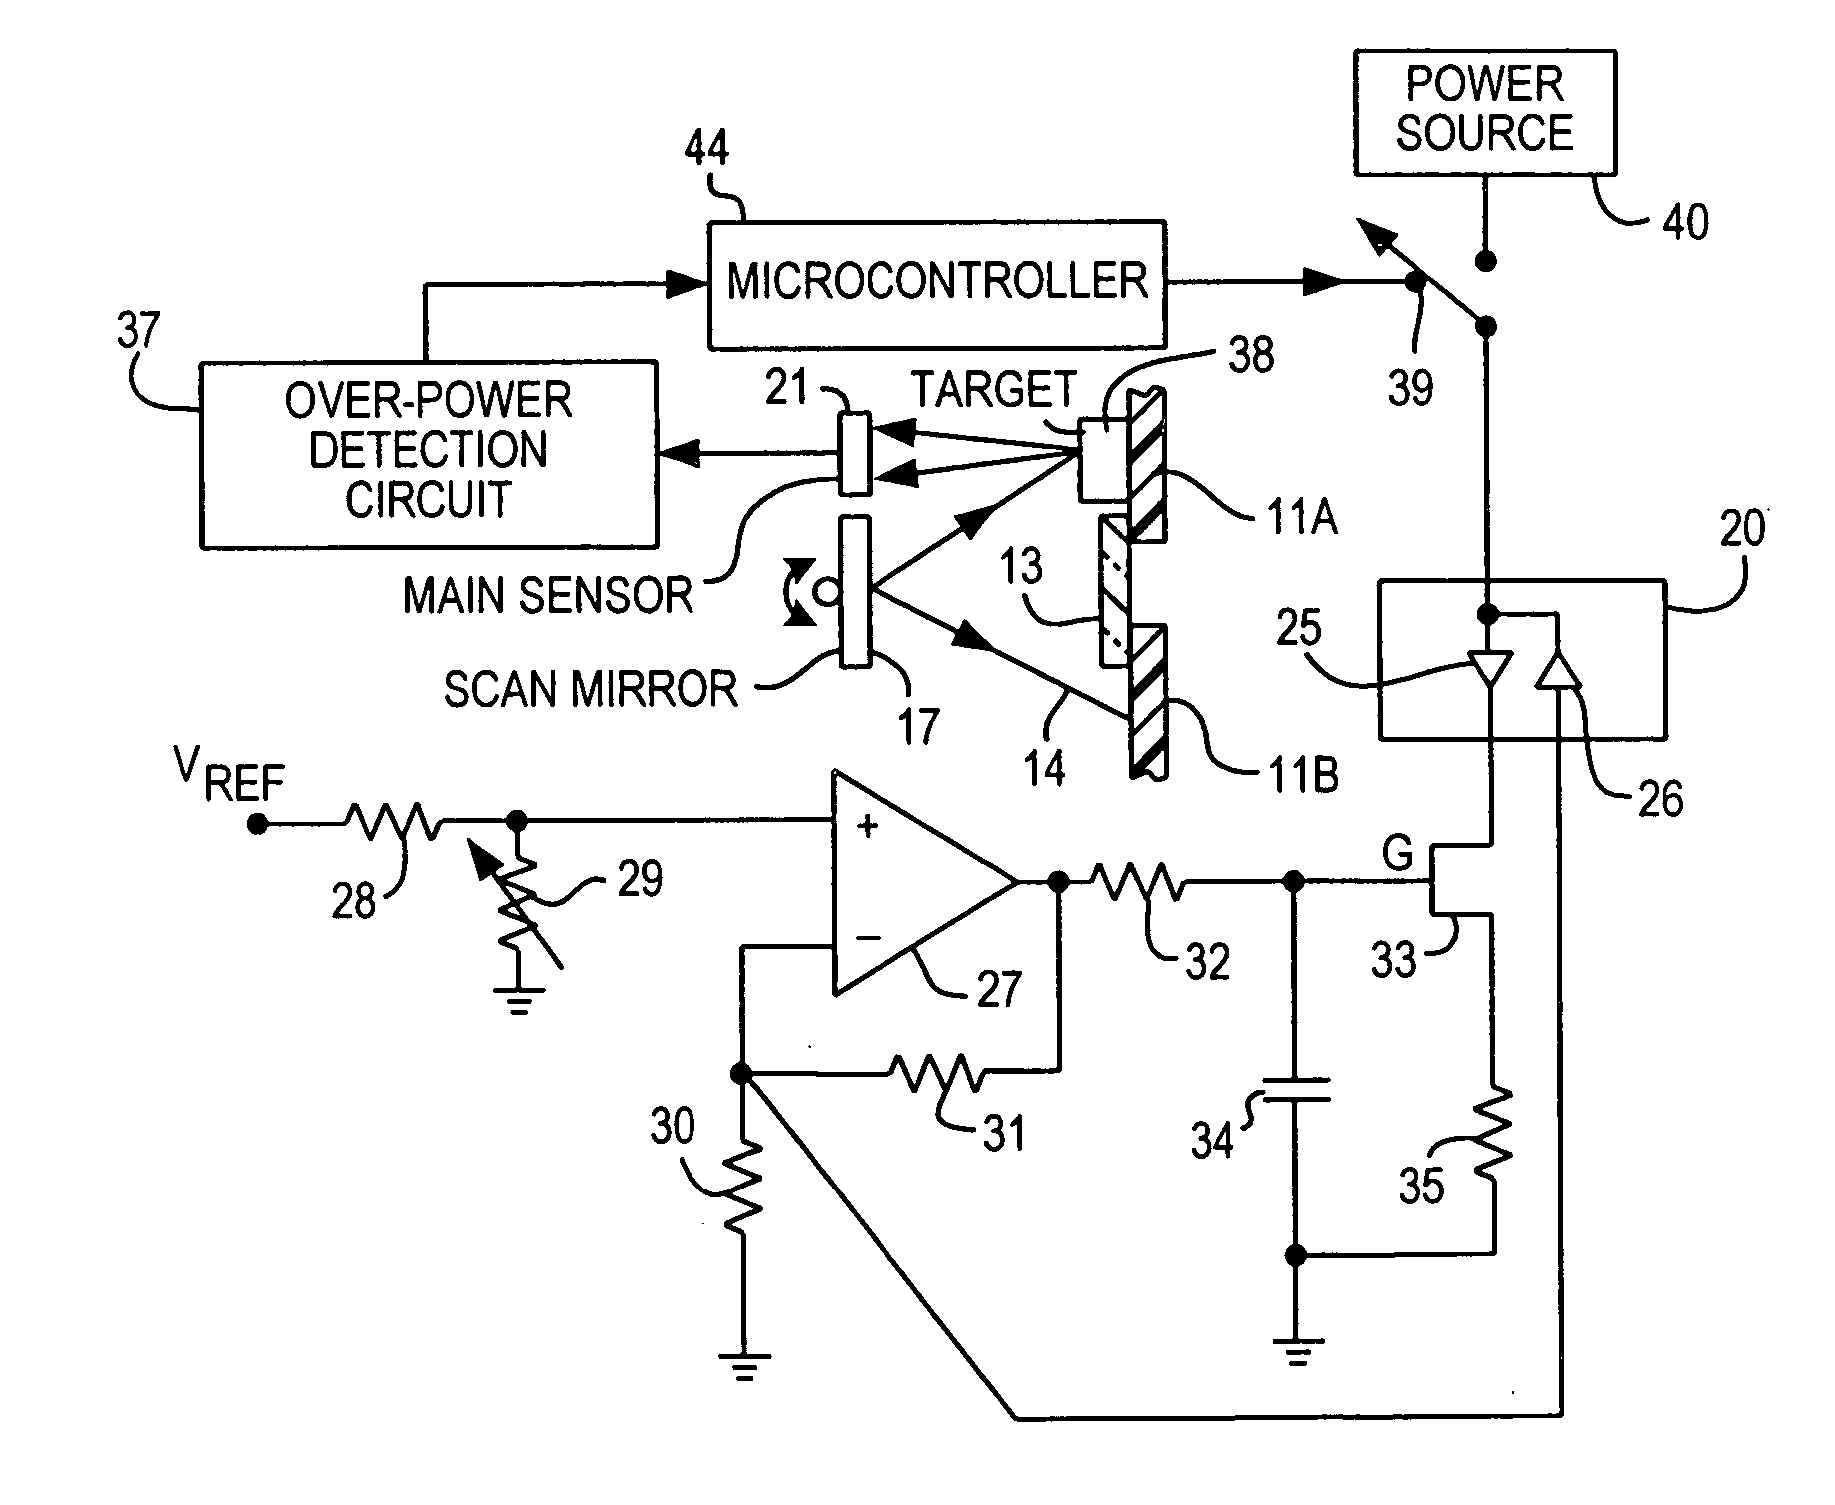 Laser power control arrangements in electro-optical readers